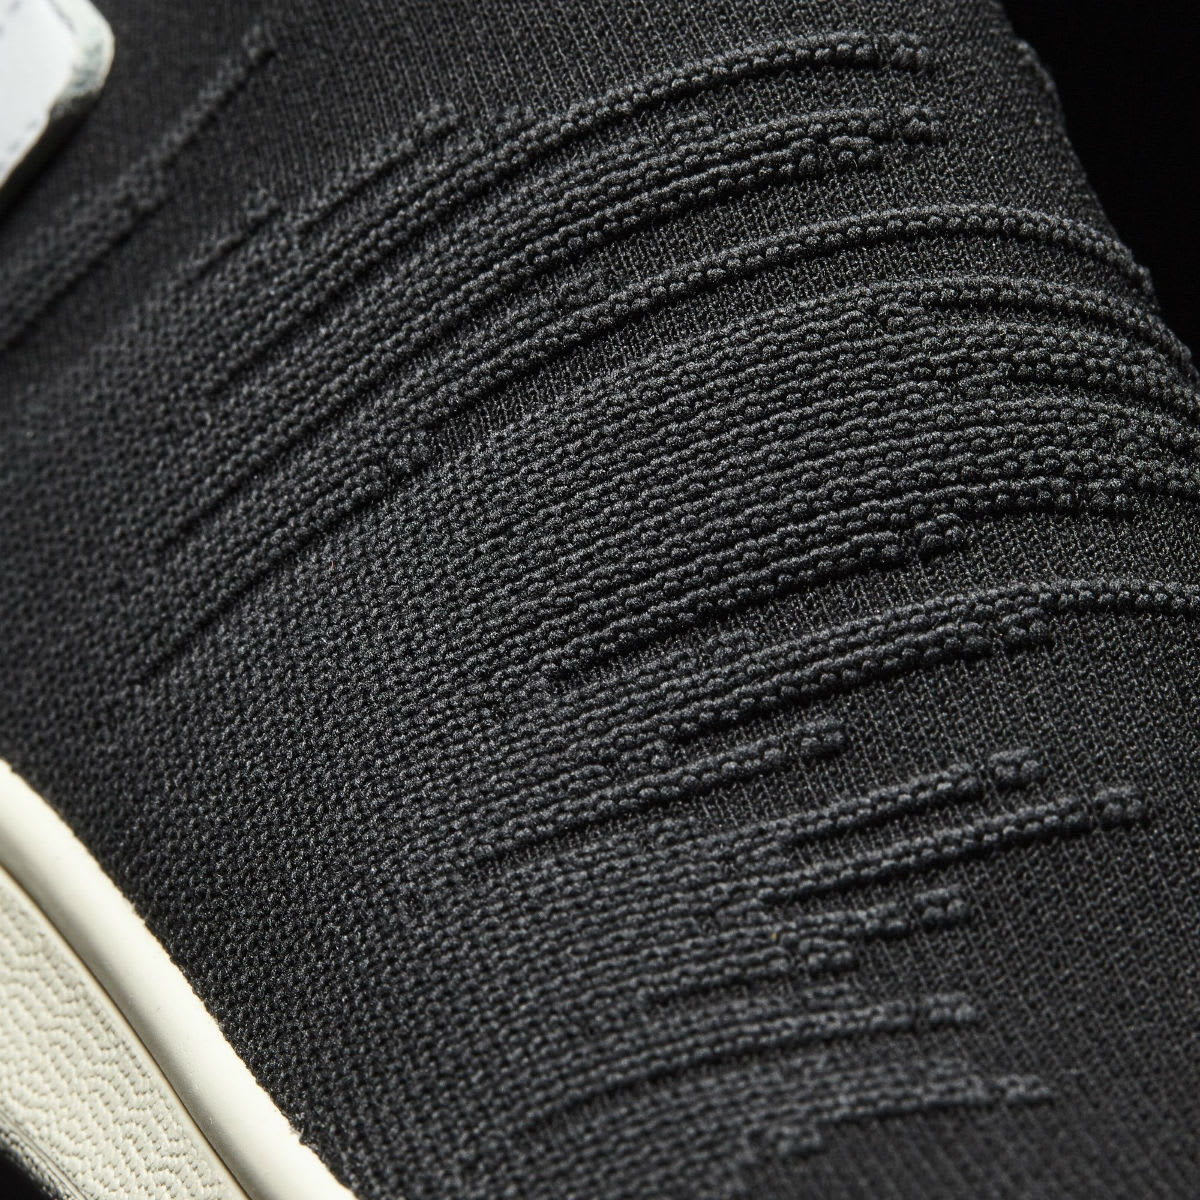 Adidas Stan Smith Sock Primeknit Sock Black Toebox